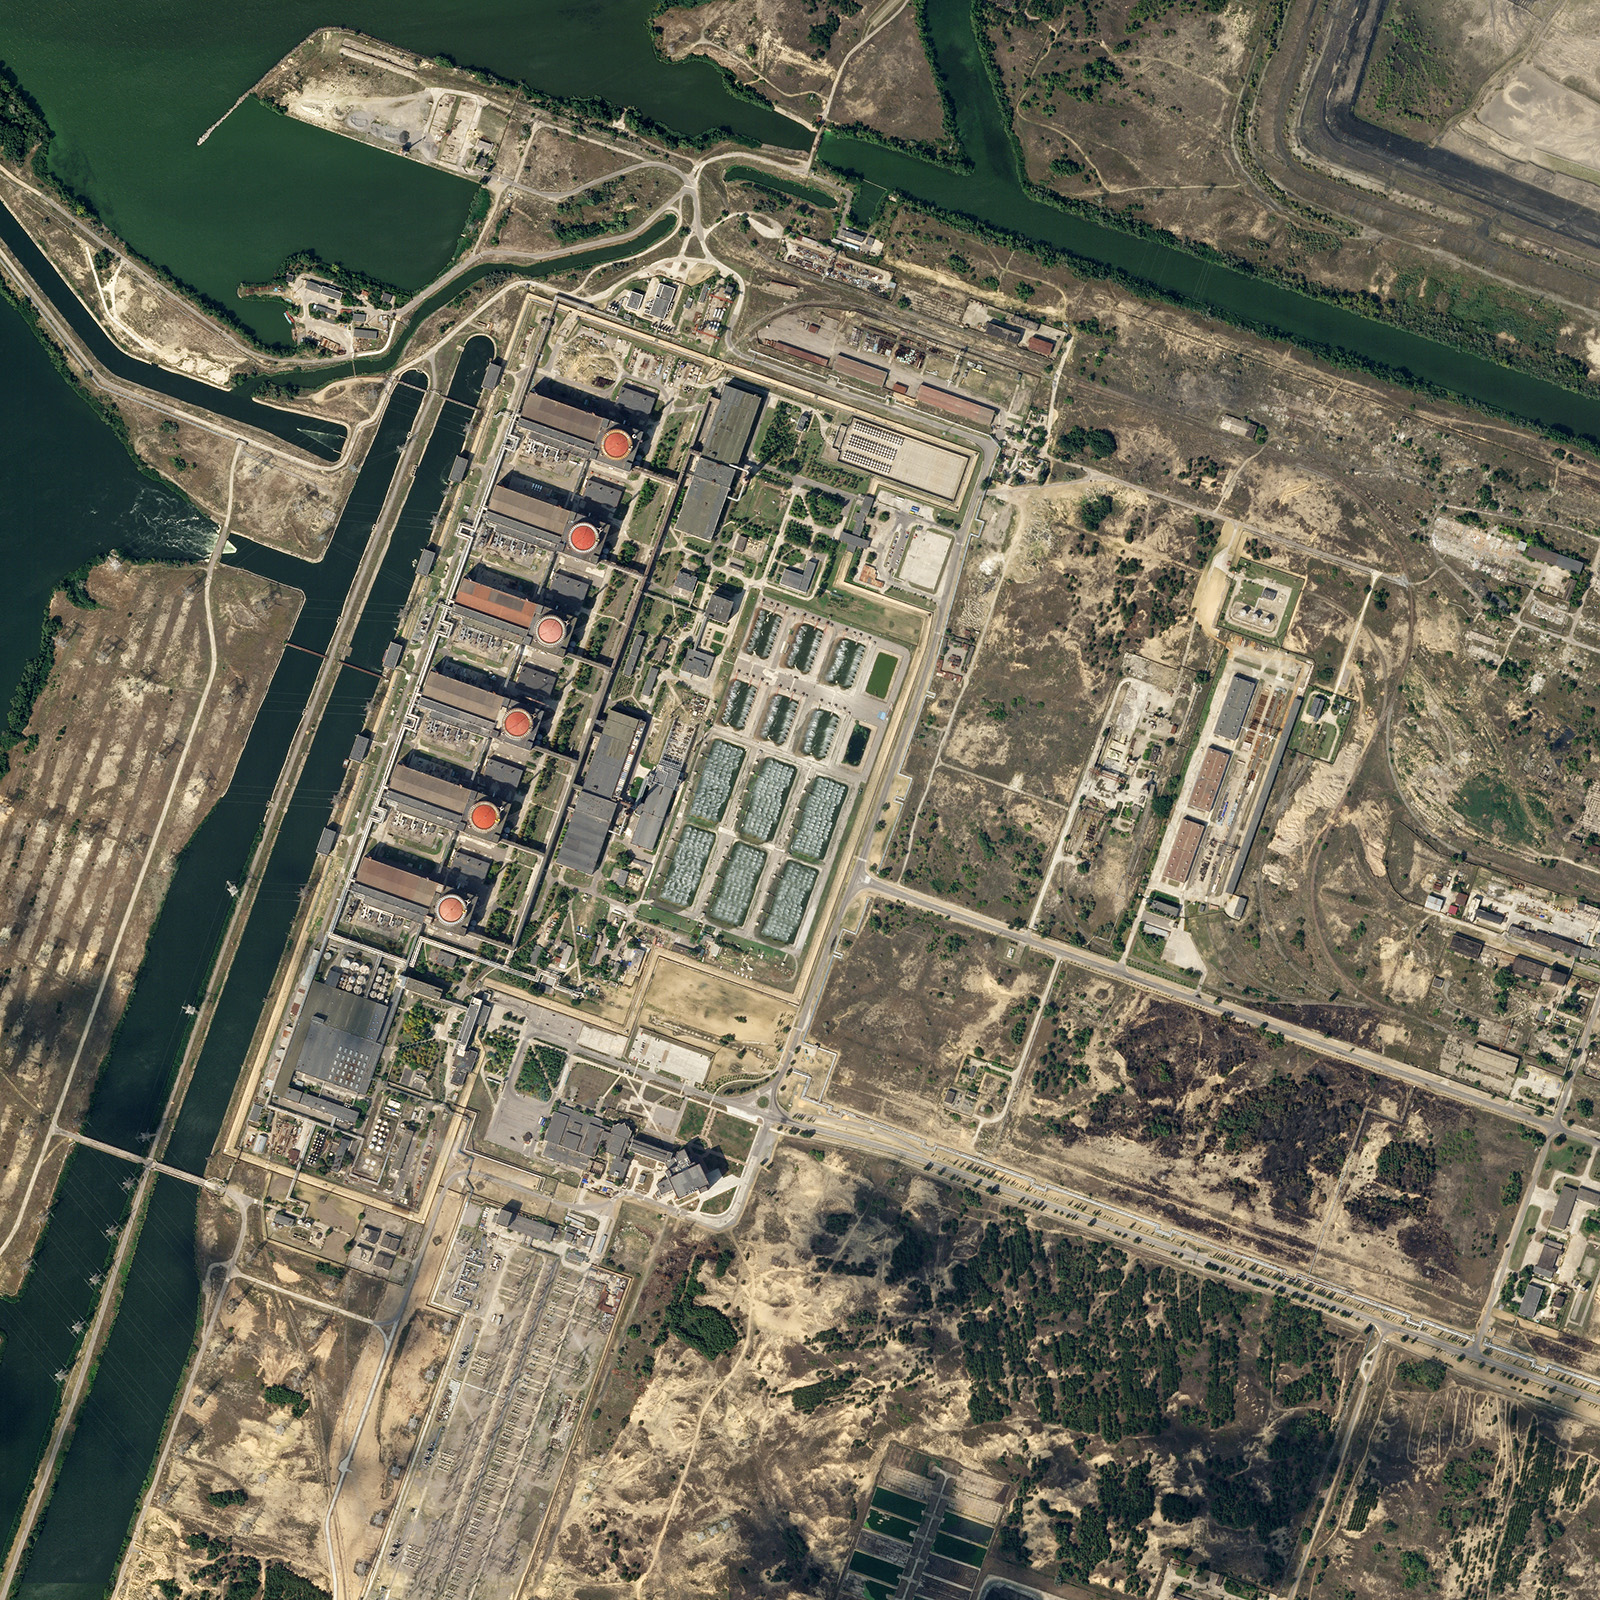 Satellite view of the Zaporizhzhia nuclear power plant, in Zaporizhzhia, Ukraine, on August 13.